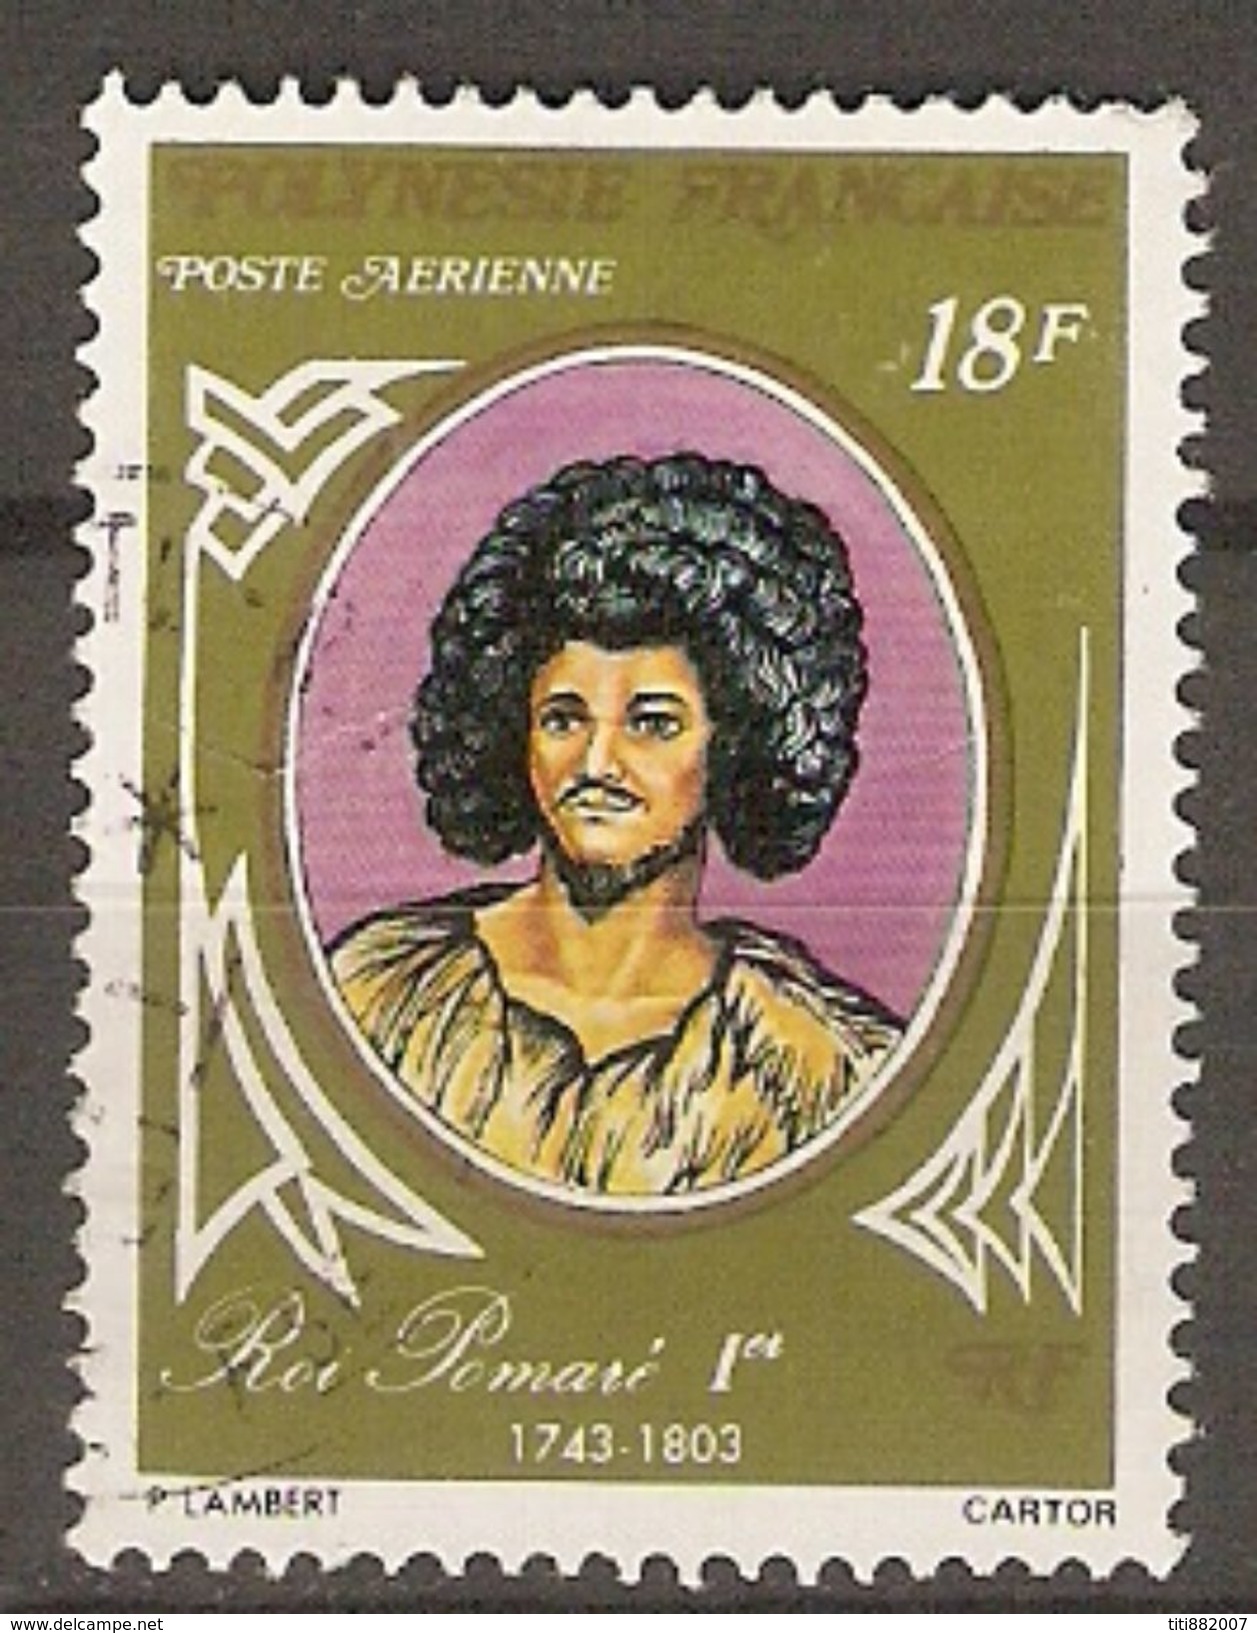 POLYNESIE  Française    -   Aéro  -   1976 .  Y&T N° 106 Oblitéré .    Roi Pomaré 1er - Gebraucht